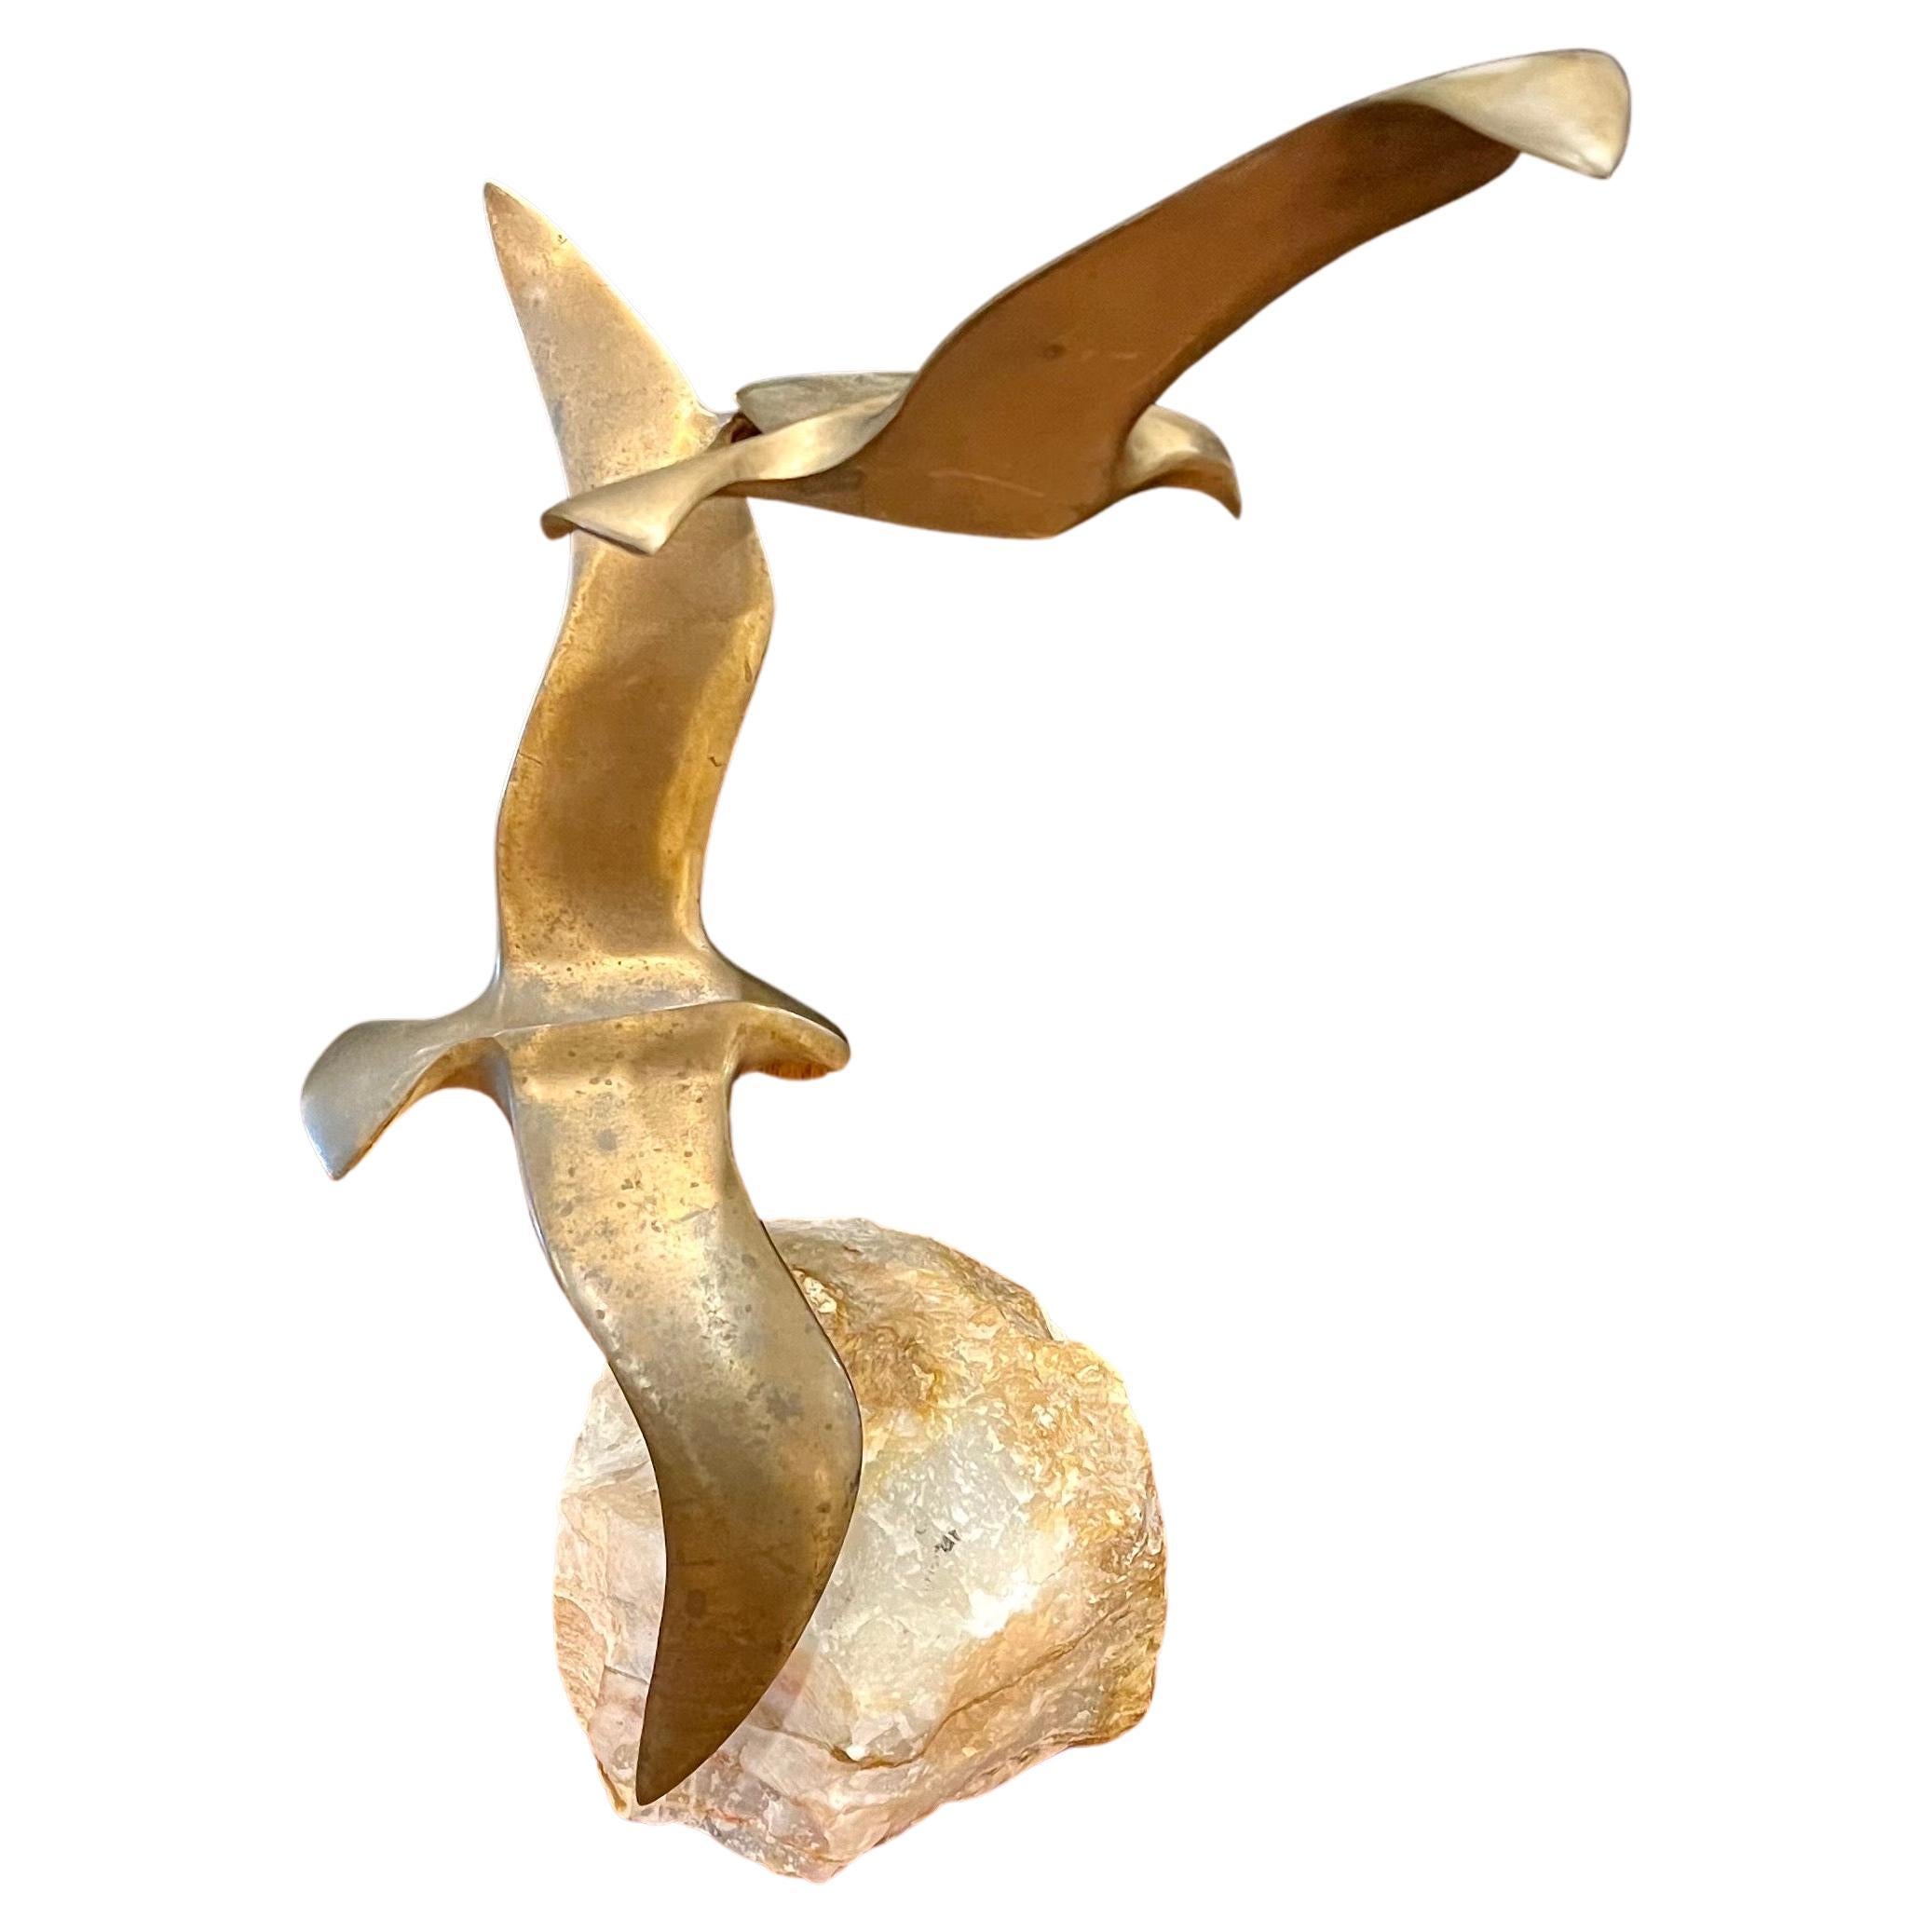 Seltene fliegende Vögel-Skulptur in Bronze-Finish, Sockel aus Rohmarmor, signiert Jere